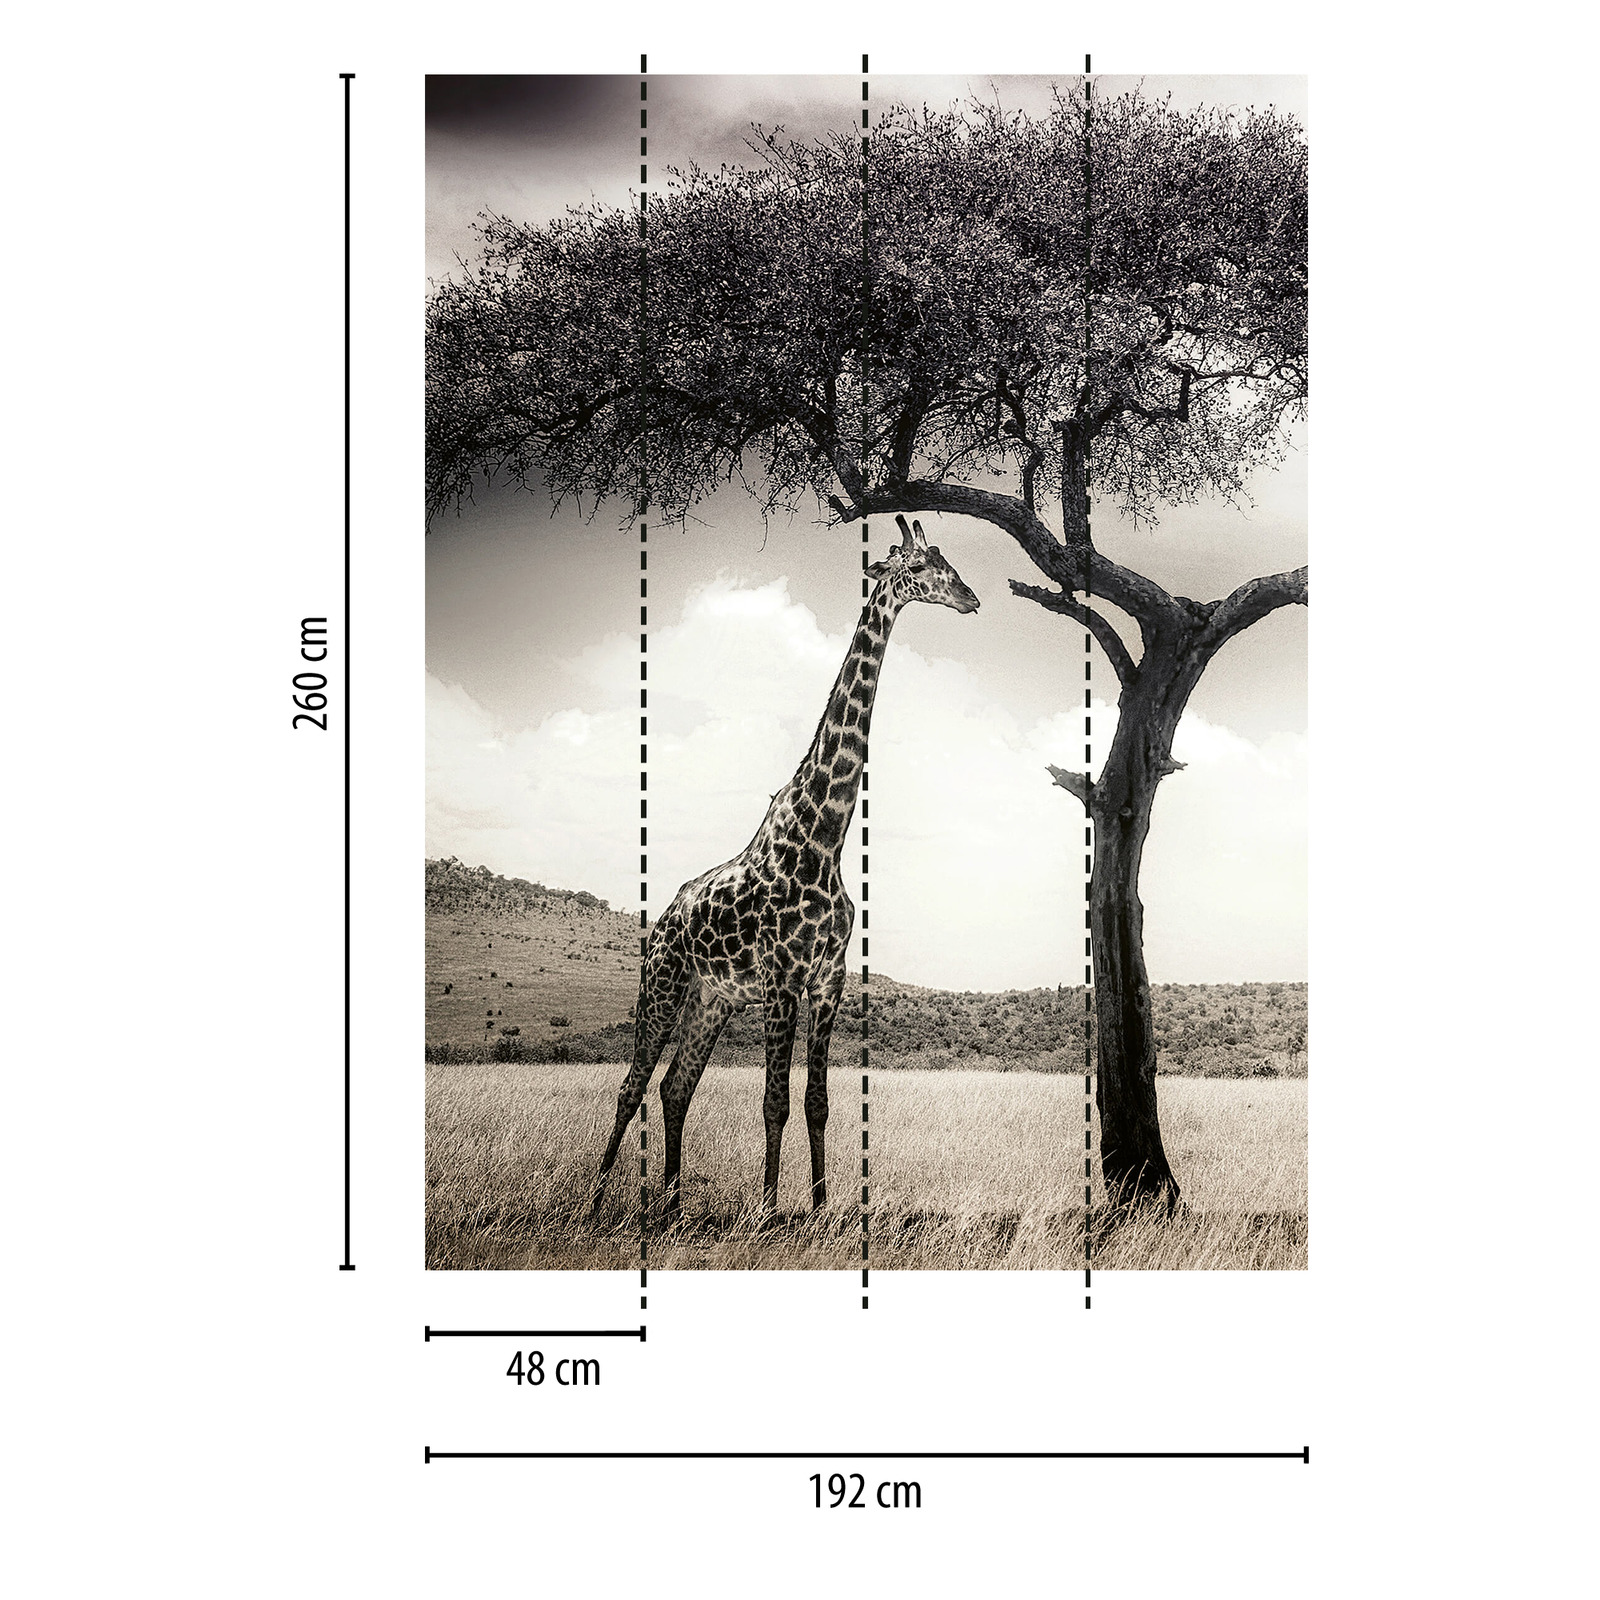             Photo wallpaper giraffe in savannah - grey, white, black
        